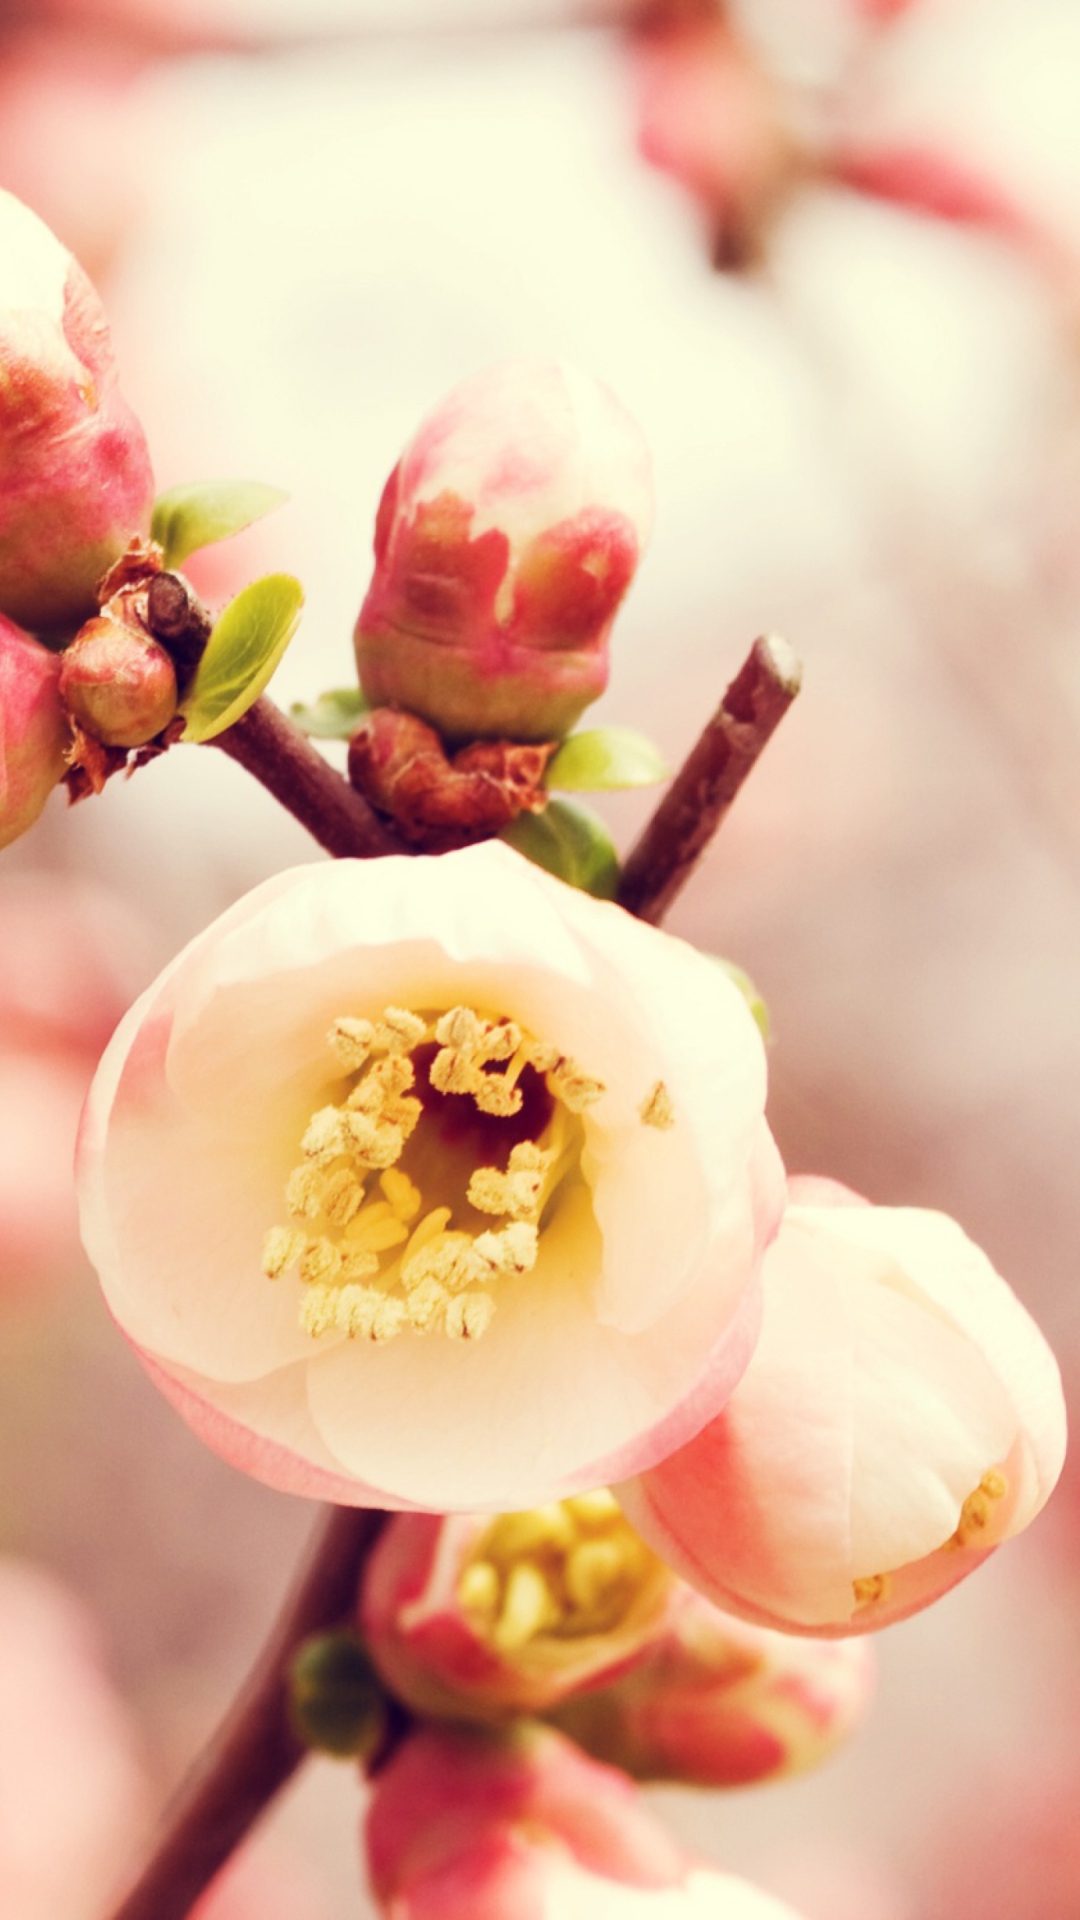 Tender Spring Blossom wallpaper 1080x1920